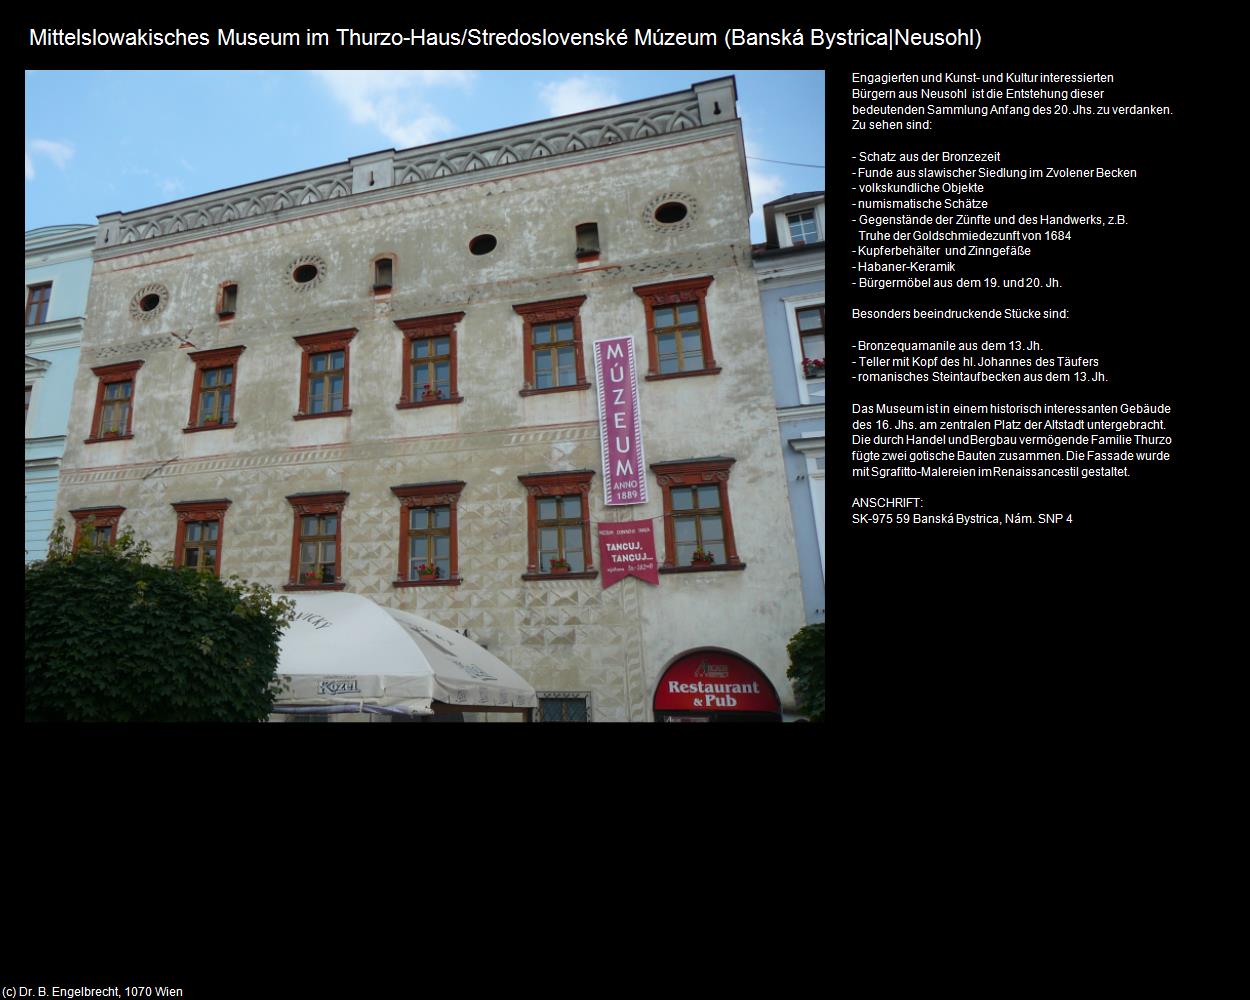 Mittelslowakisches Museum im Thurzo-Haus (Banská Bystrica|Neusohl) in SLOWAKEI